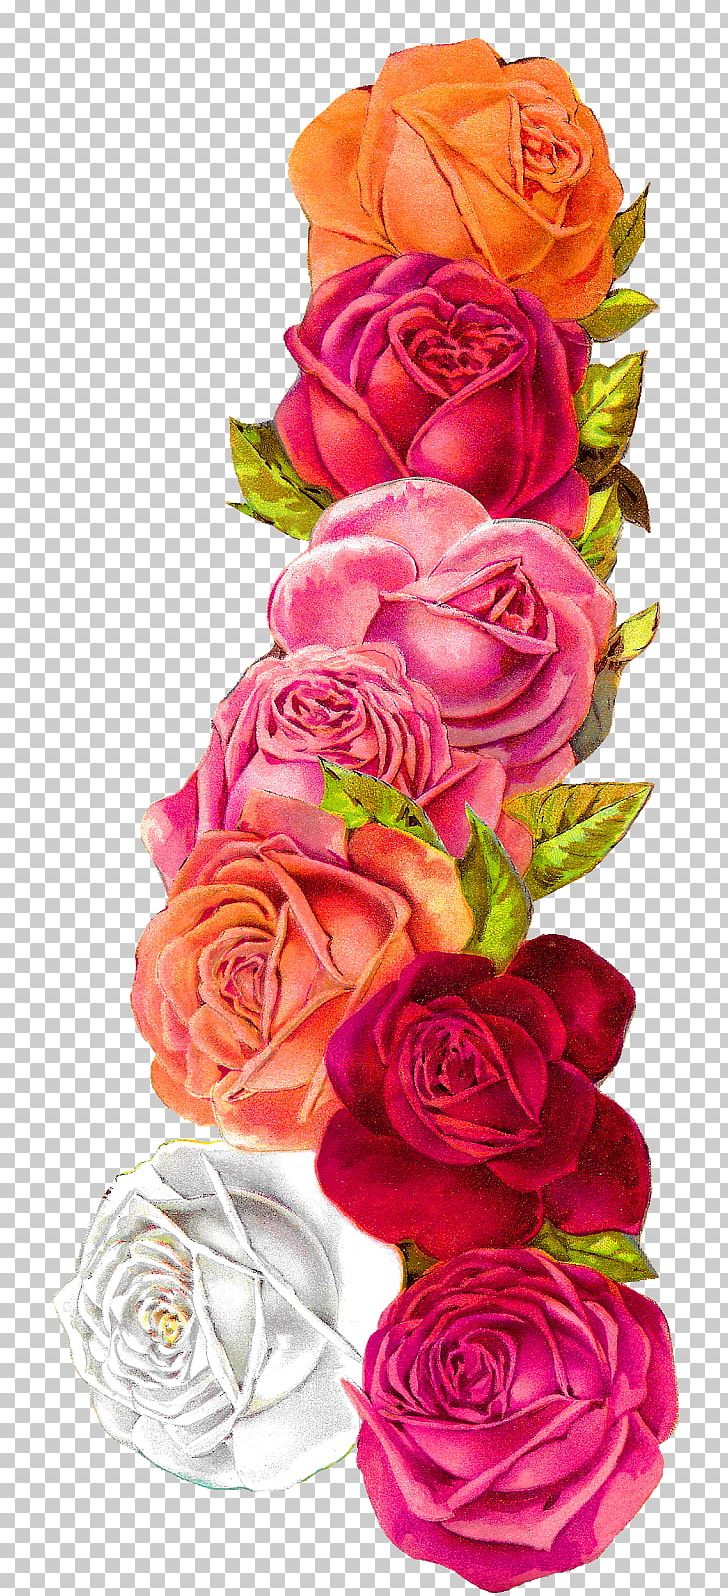 Garden Roses Cabbage Rose Floral Design Shabby Chic PNG, Clipart, Artificial Flower, Border, Decorative Arts, Downloads, Floral Design Free PNG Download